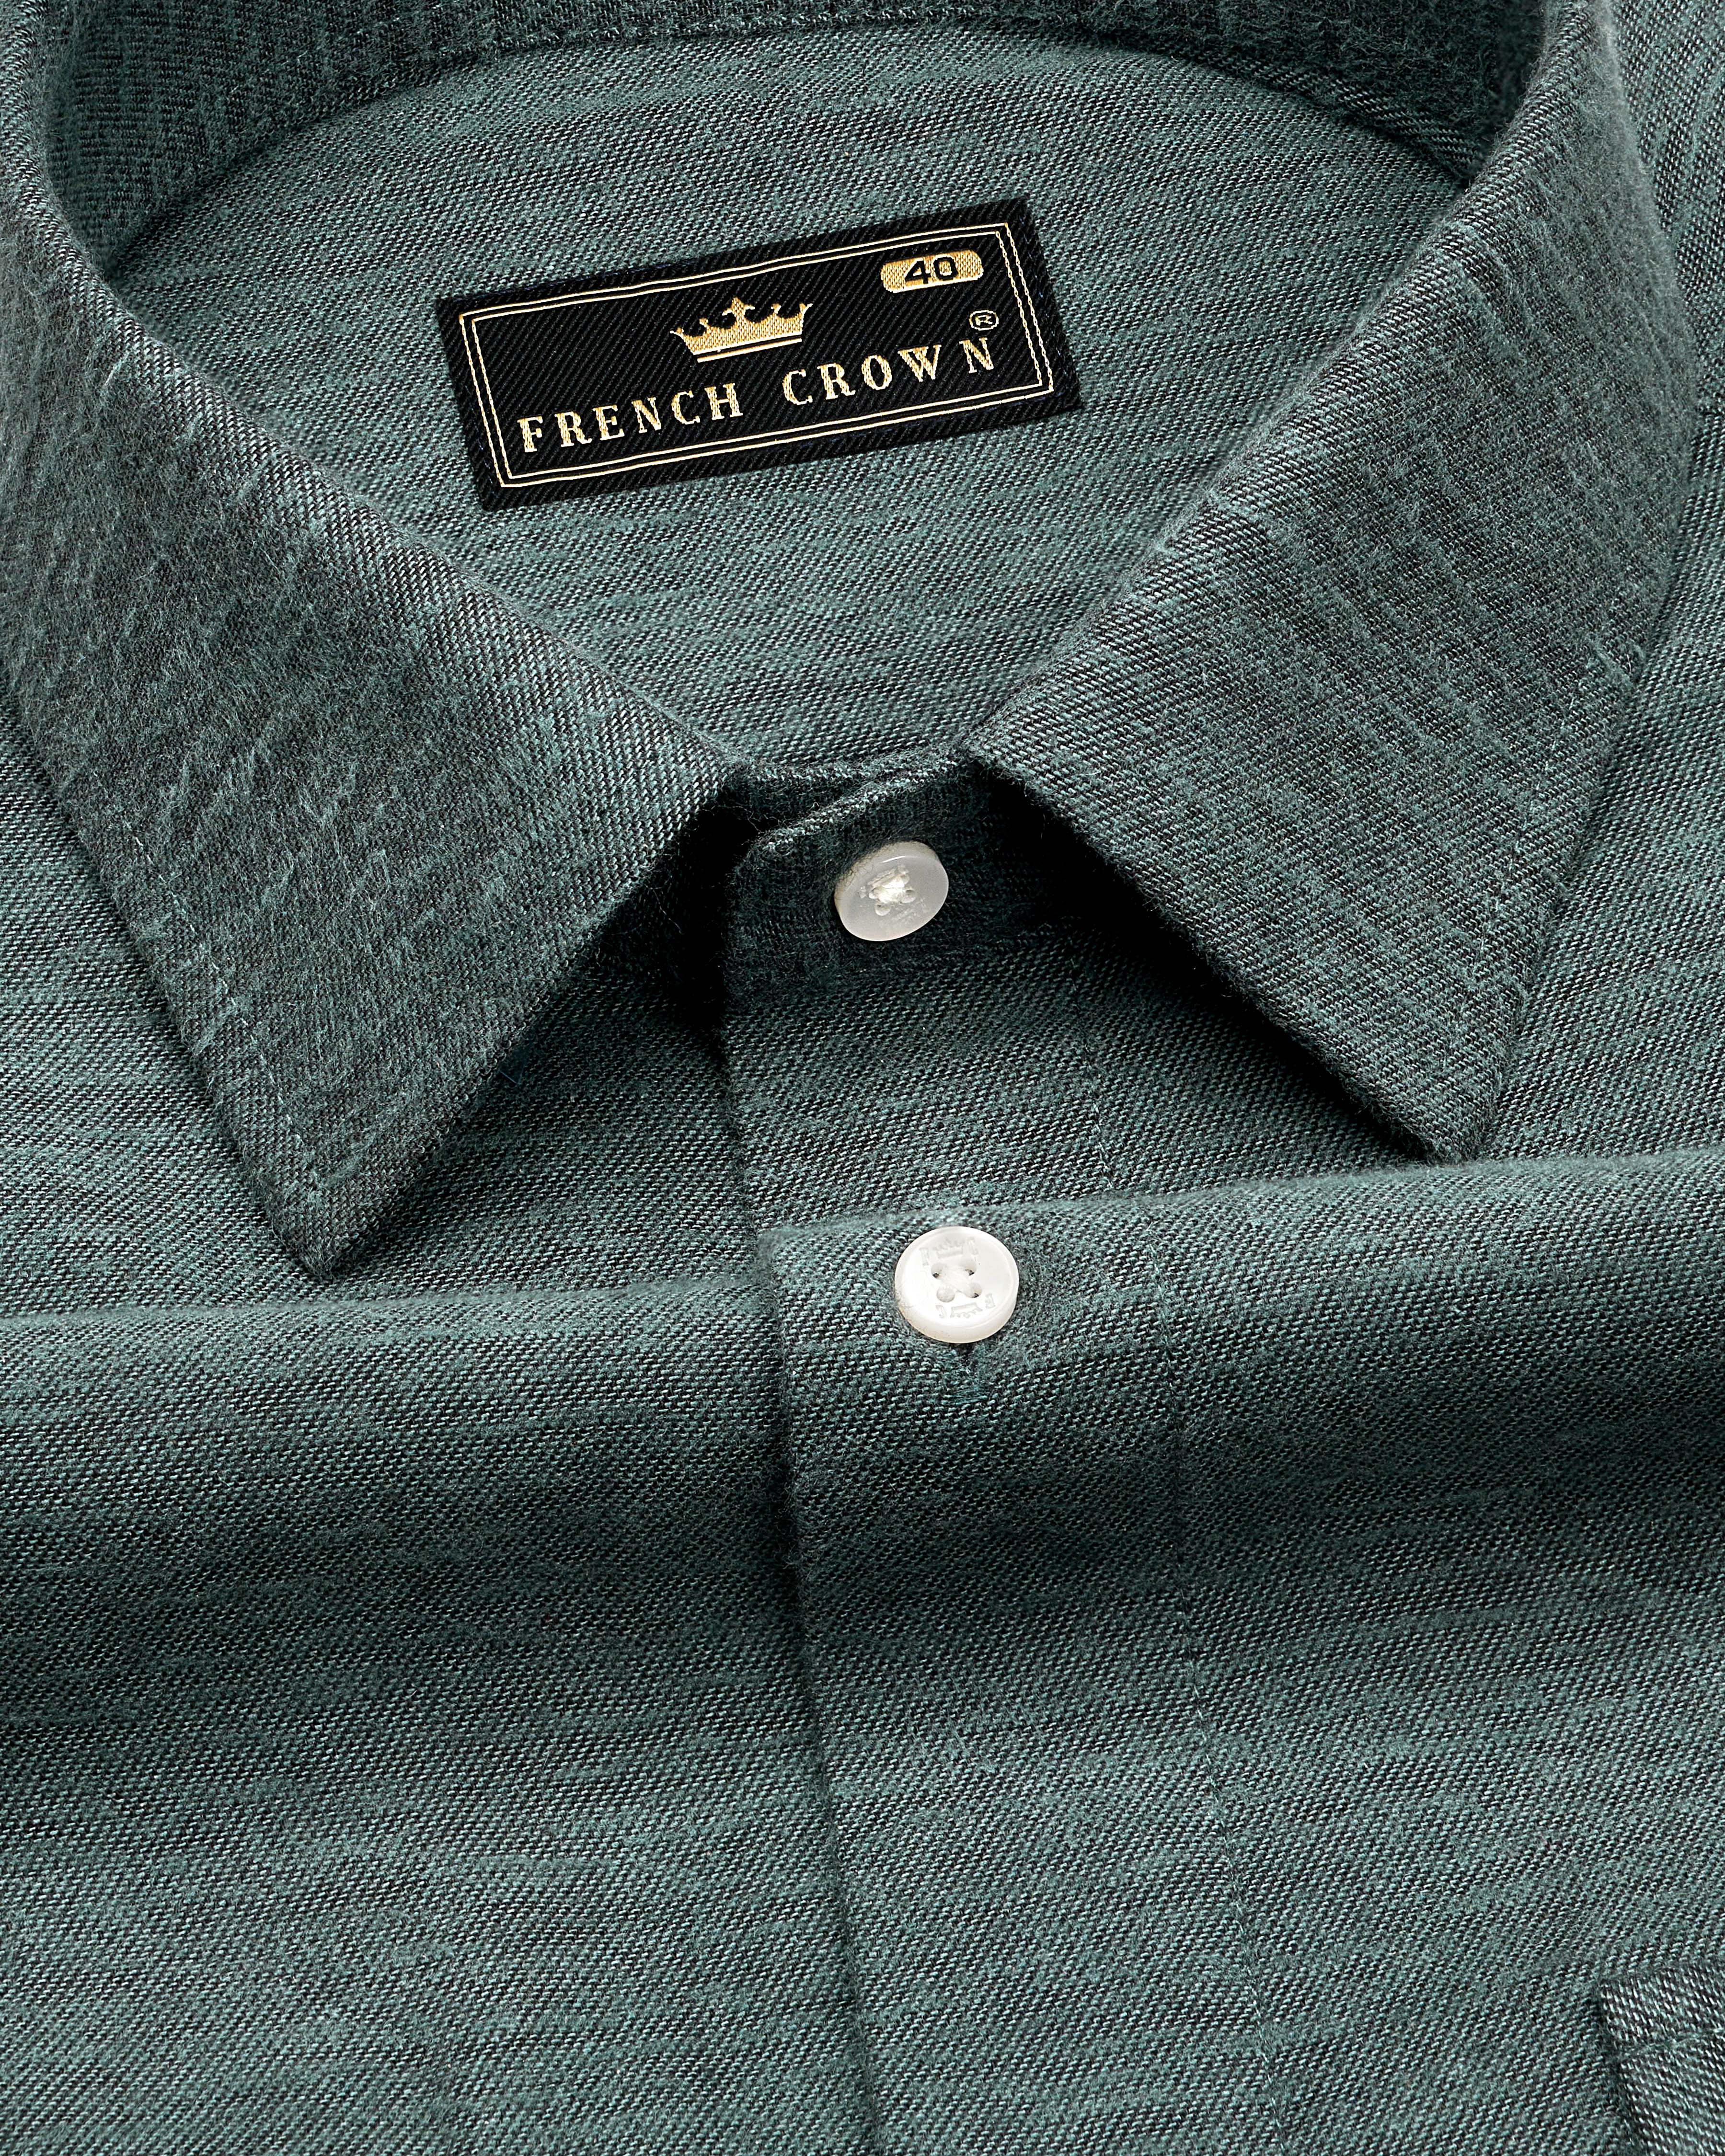 Spruce Green Royal Oxford Overshirt/Shacket